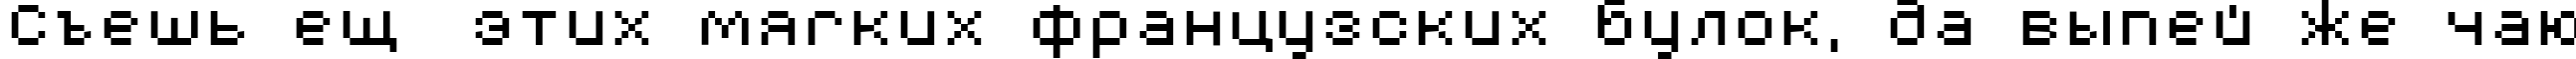 Пример написания шрифтом AuX DotBitC Xtra текста на русском